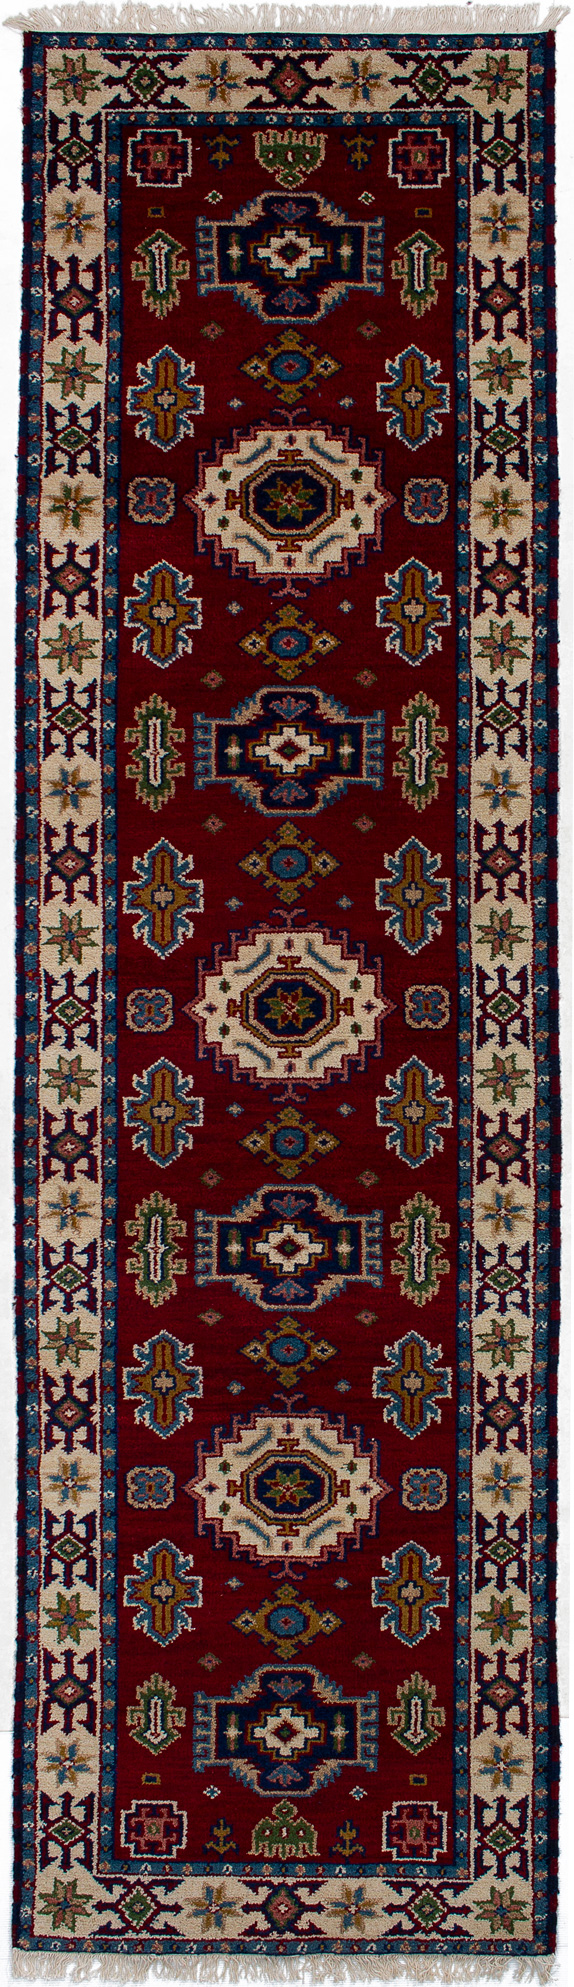 Hand-knotted Royal Kazak Dark Red Wool Rug 2'9" x 9'11"  Size: 2'9" x 9'11"  